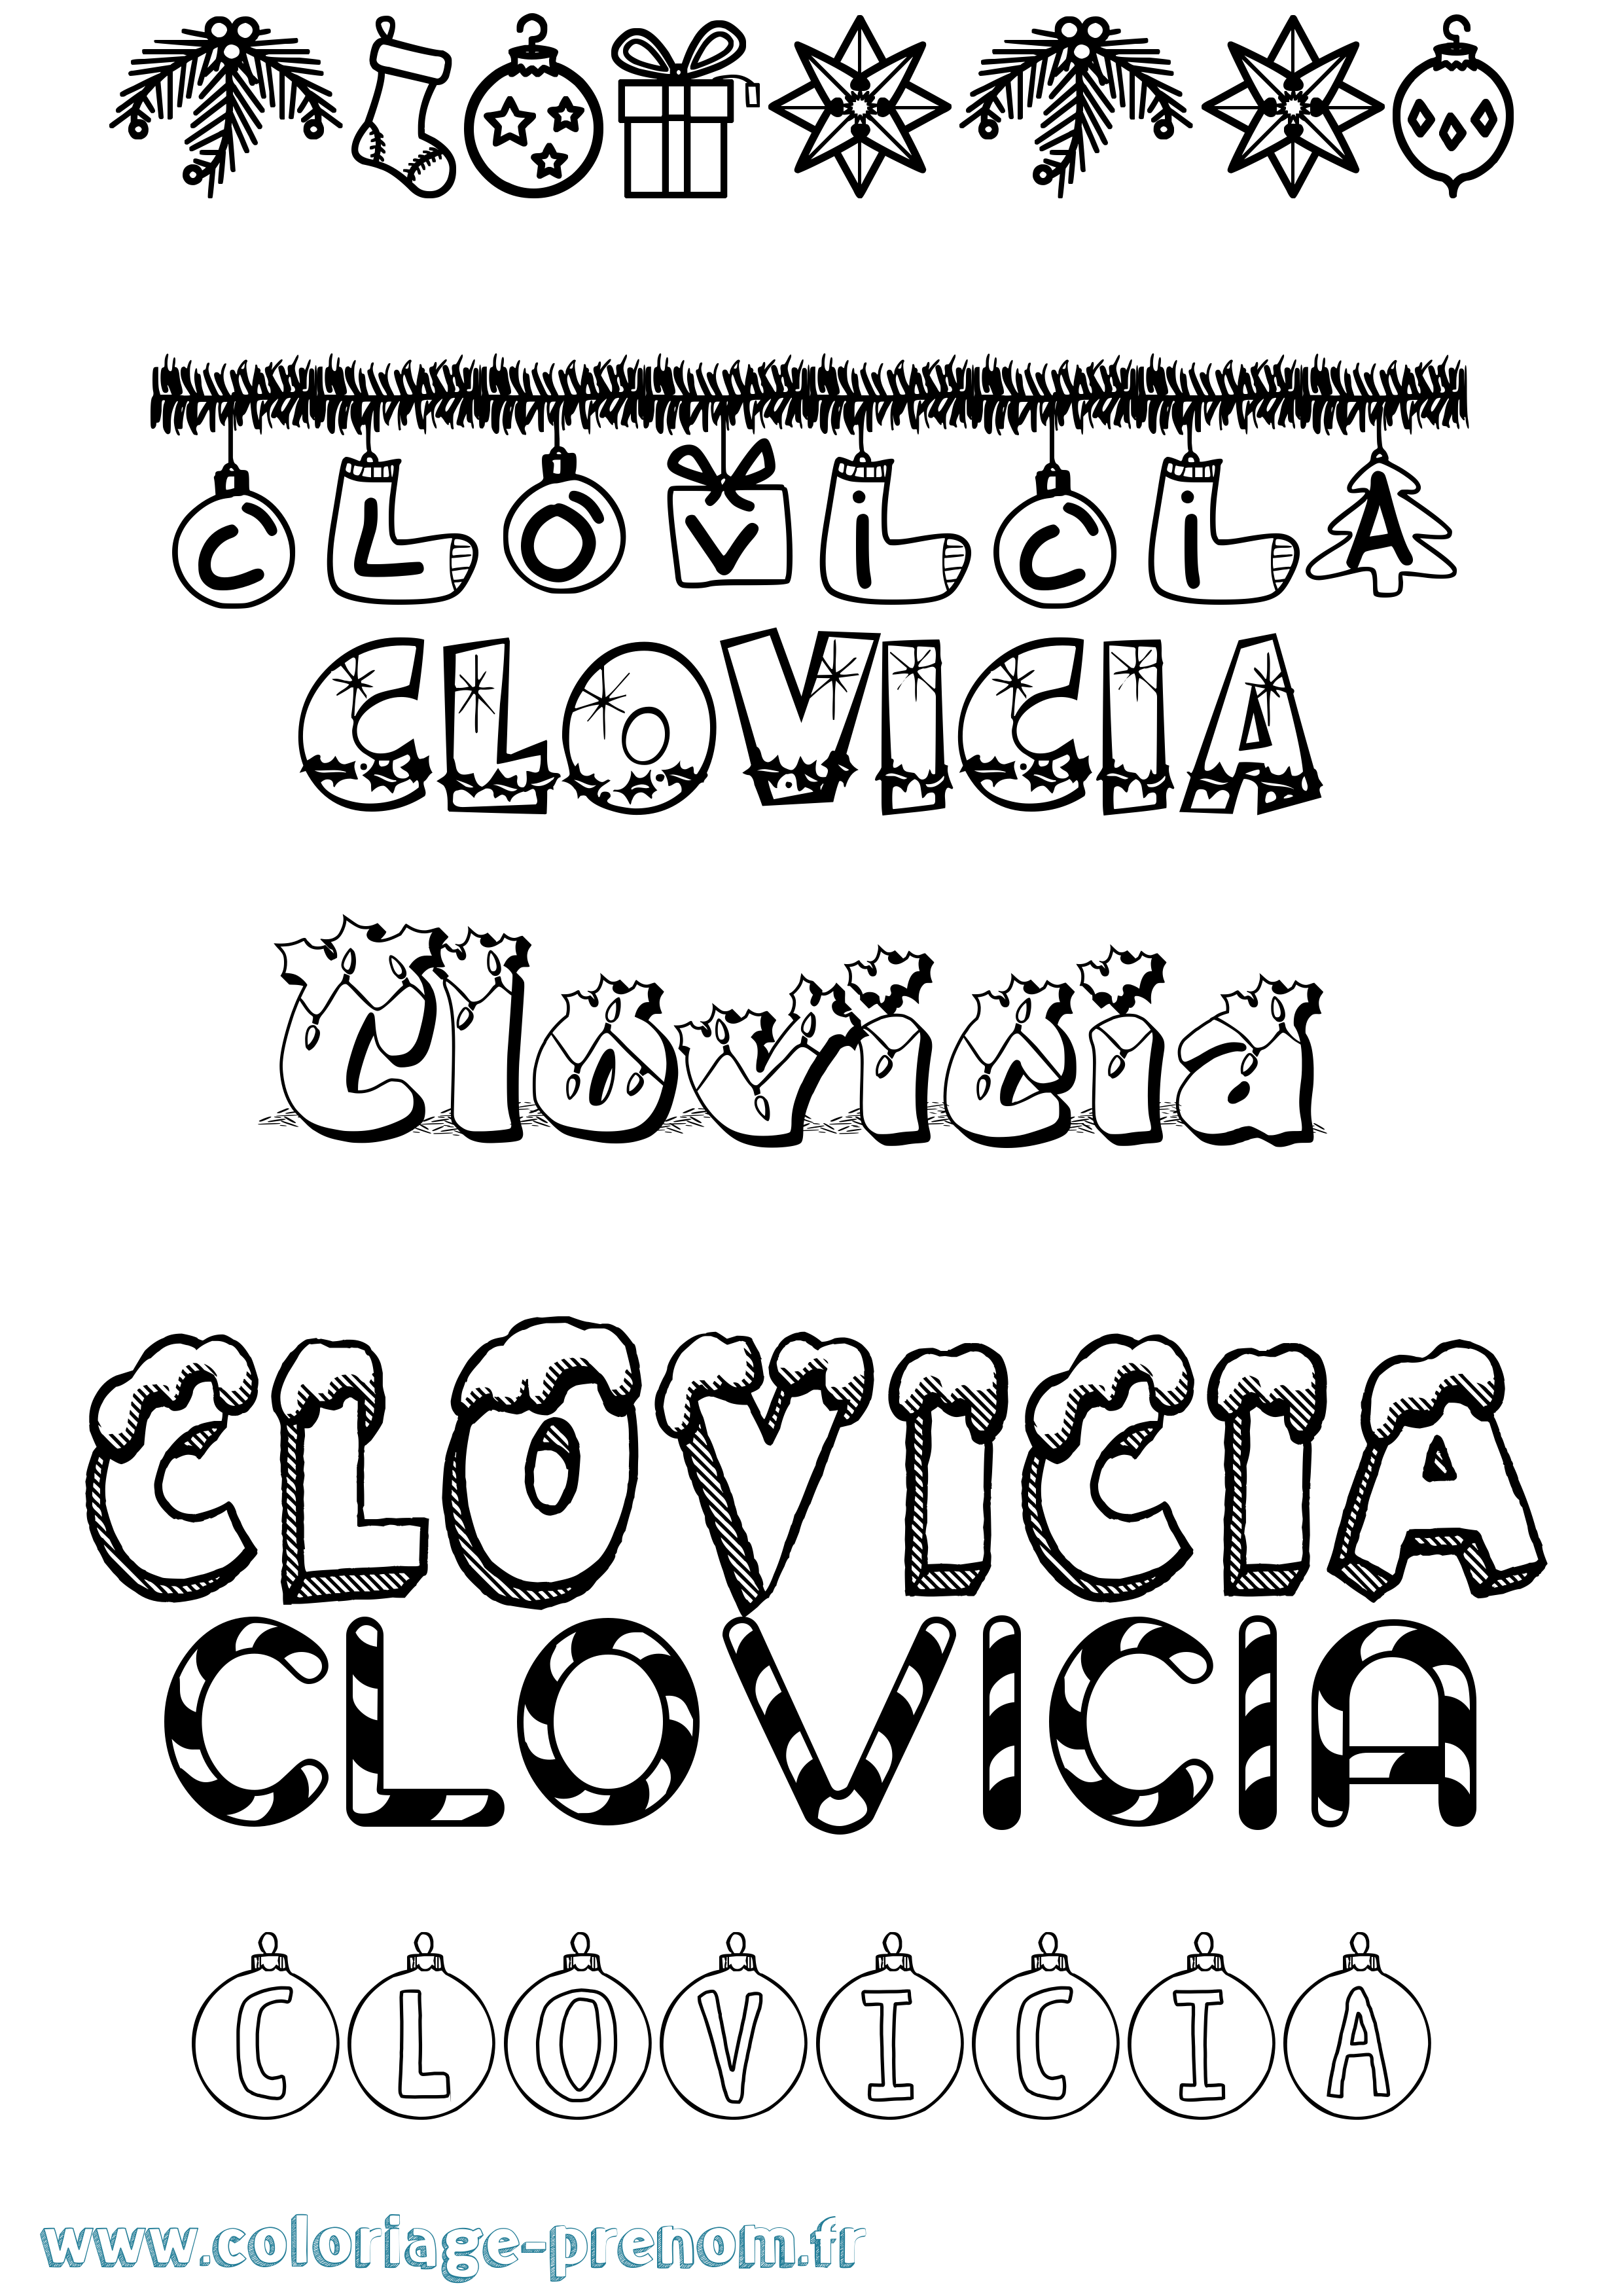 Coloriage prénom Clovicia Noël